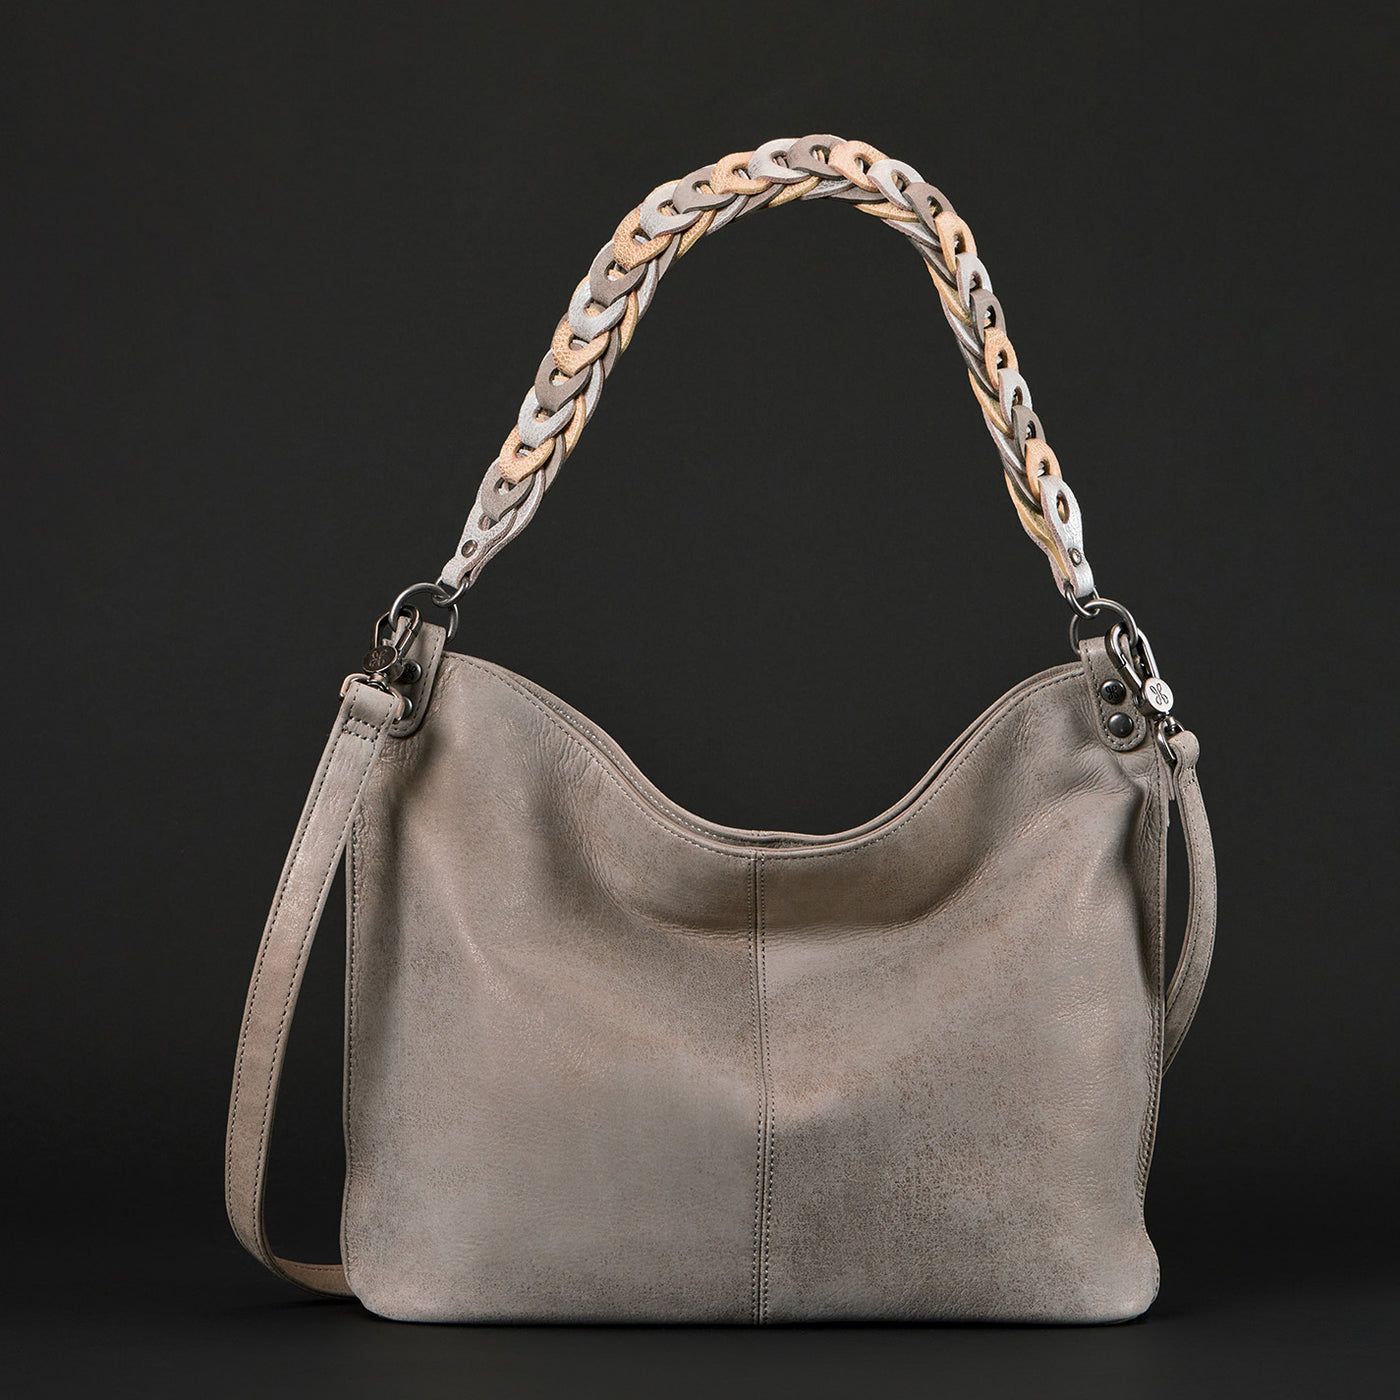 Pier Shoulder Bag in Metallic Leather - Granite Grey